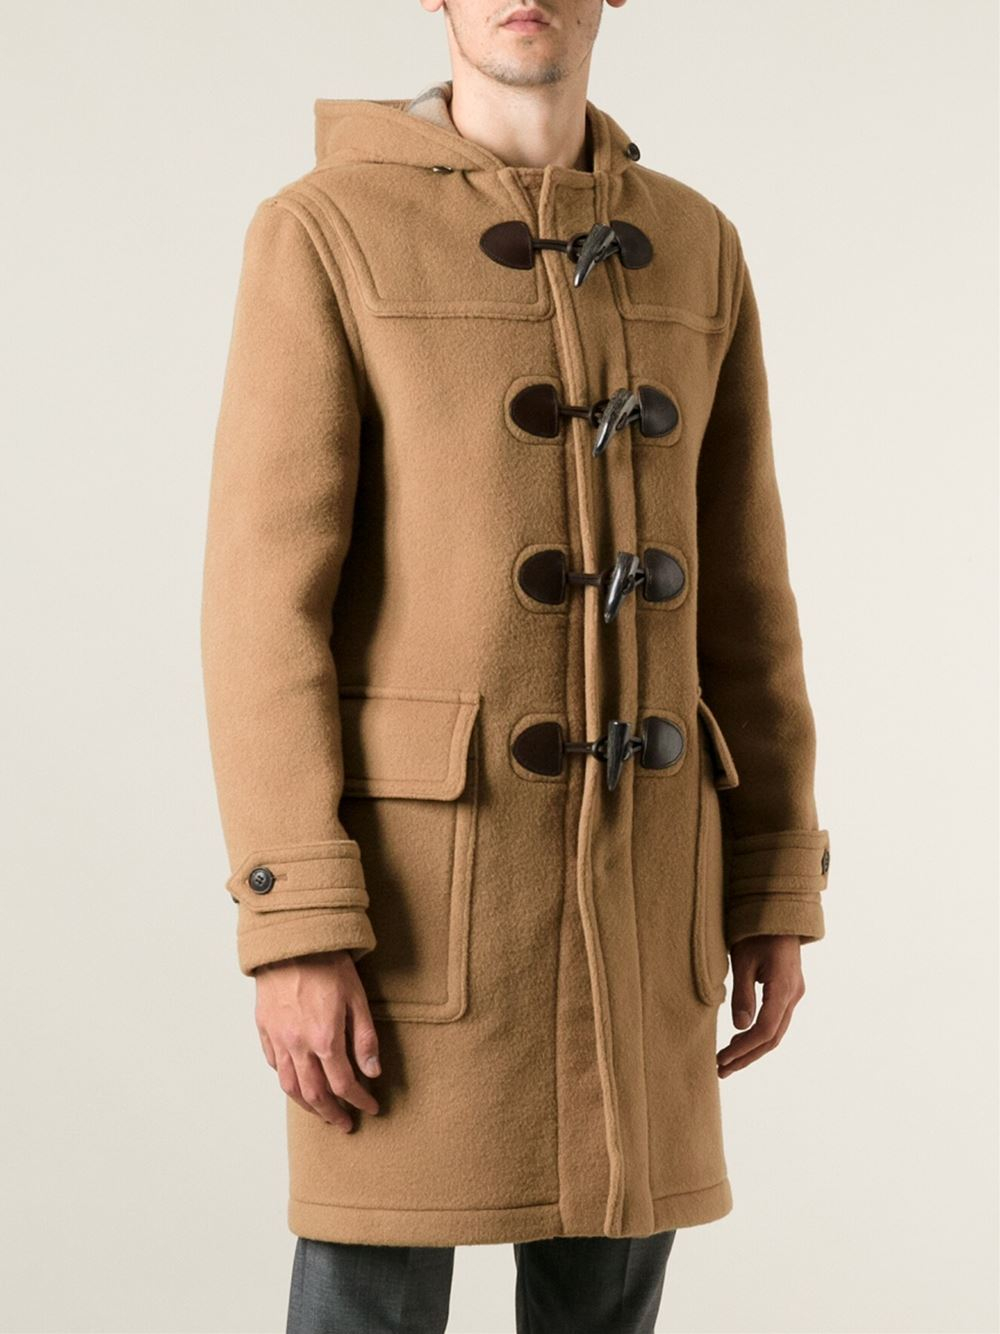 Burberry Brit Duffle Coat in Natural for Men - Lyst